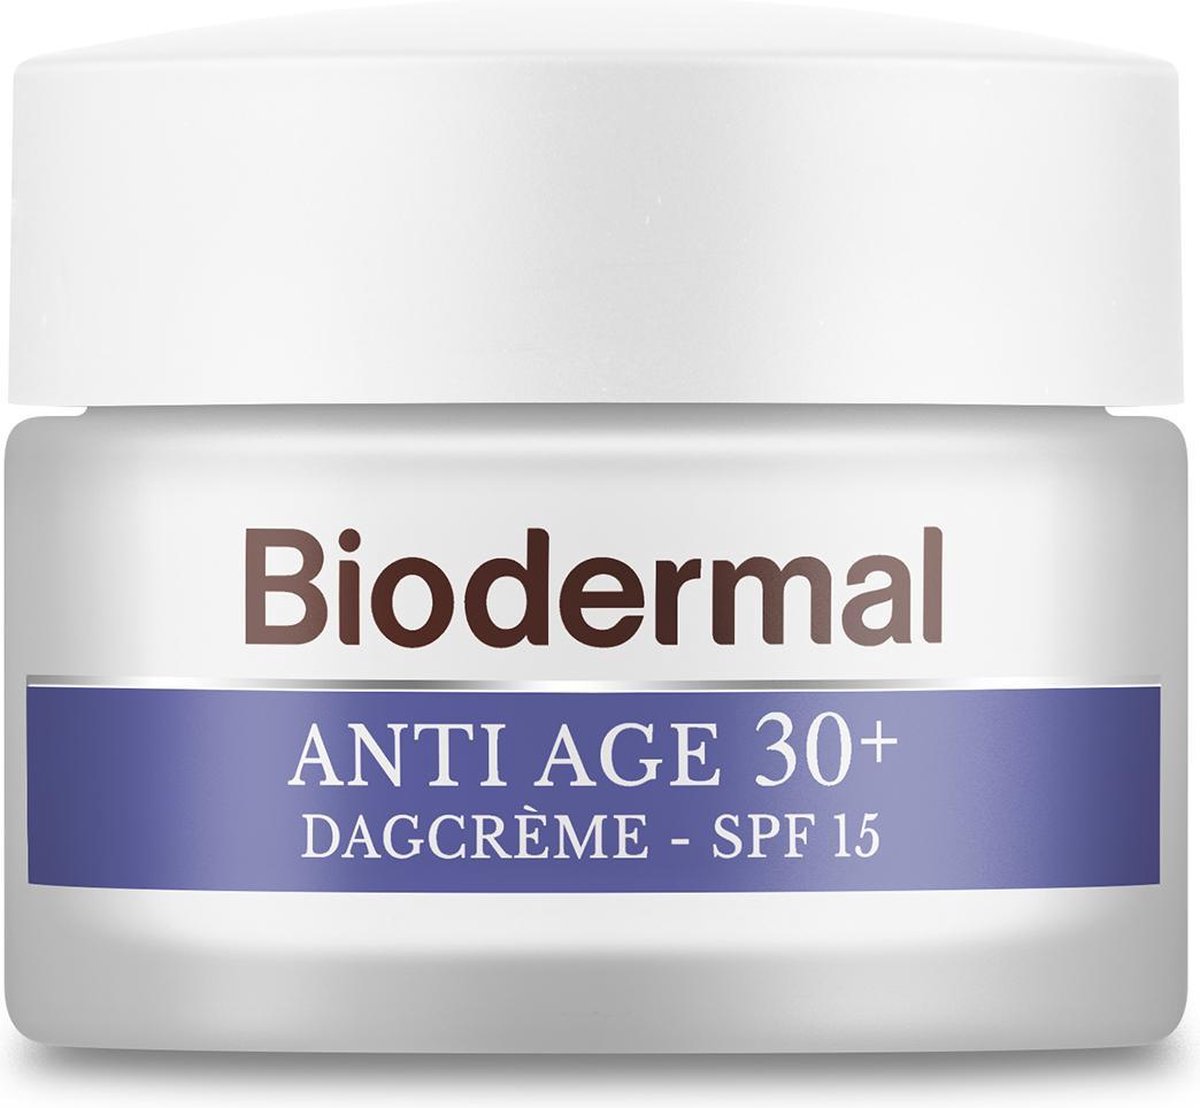 Biodermal Anti Age 30+ - Dagcrème huidveroudering SPF15 - 50ml |